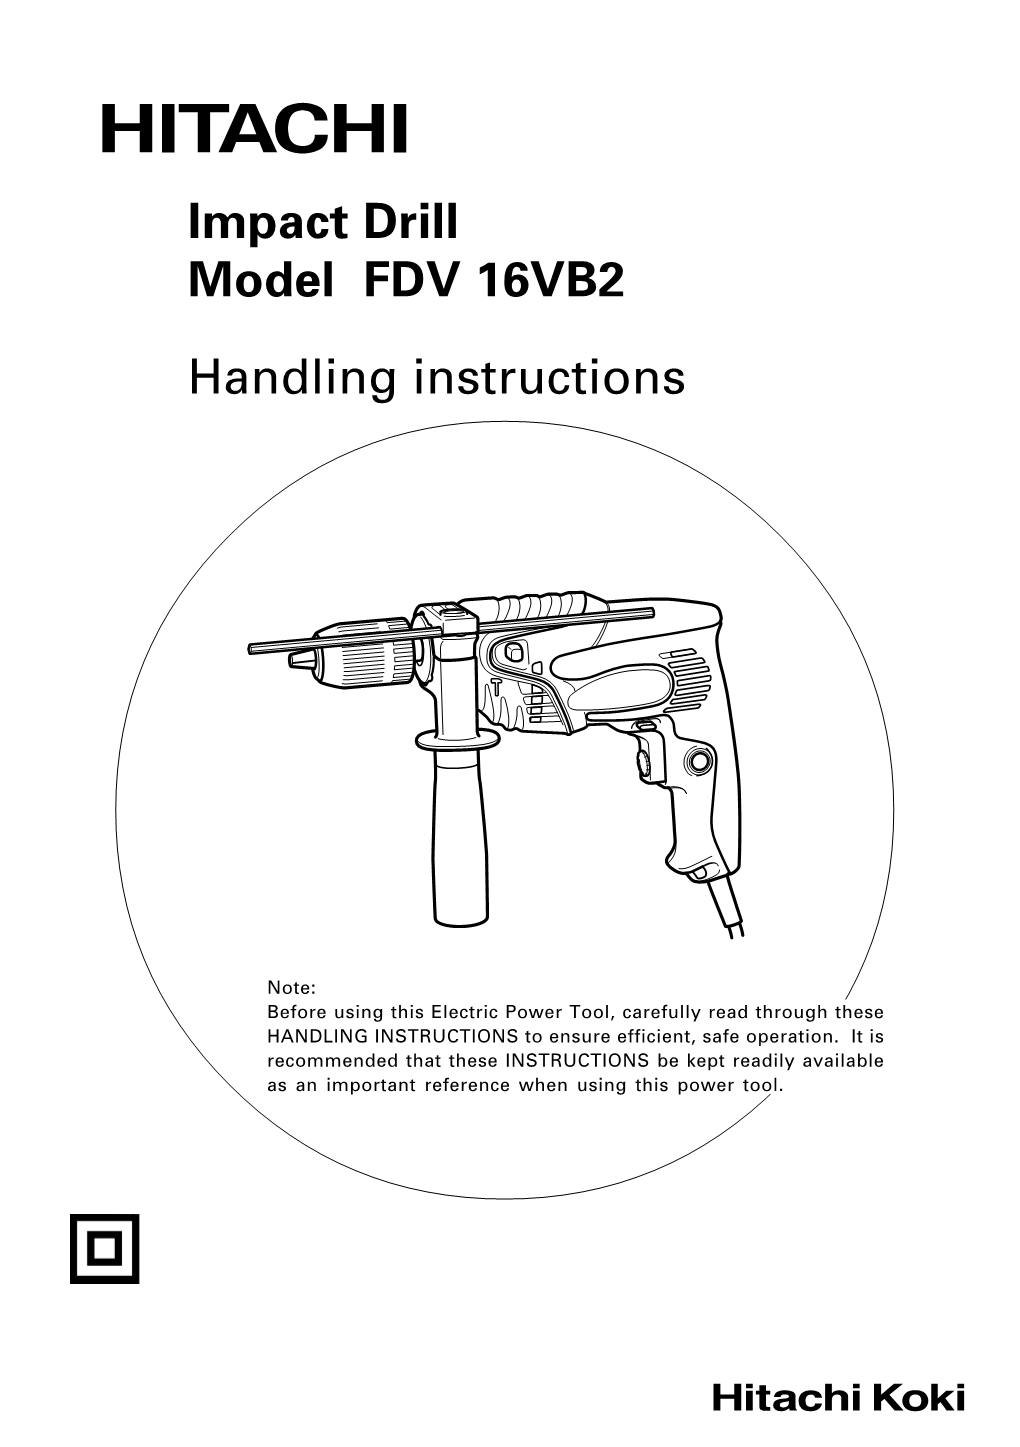 Impact Drill Model FDV 16VB2 Handling Instructions